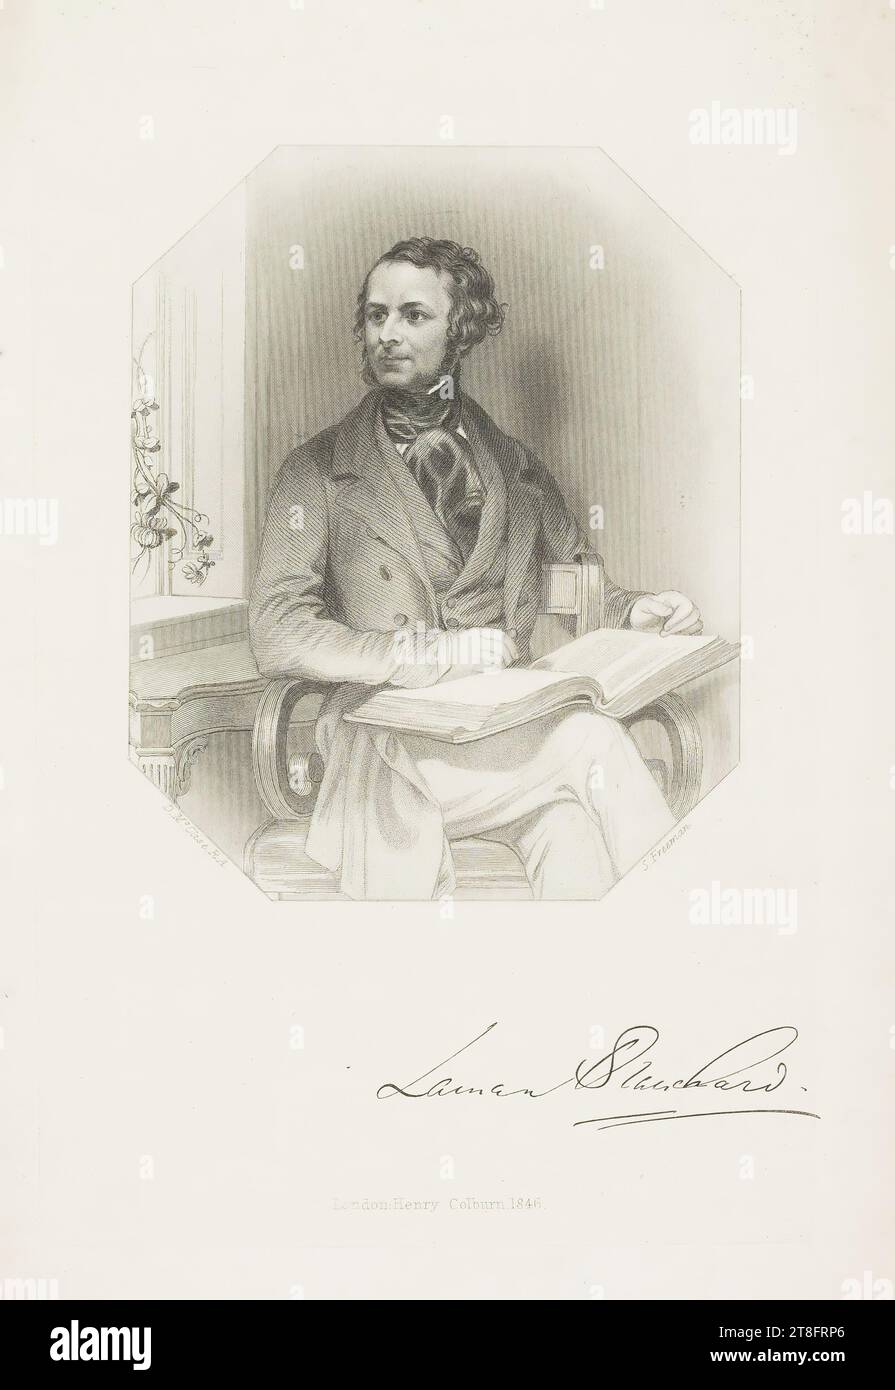 D. McClise, R. A. S. Freeman. Laman Blanchard Signatur. London. Henry Colburn. 1846 Stockfoto